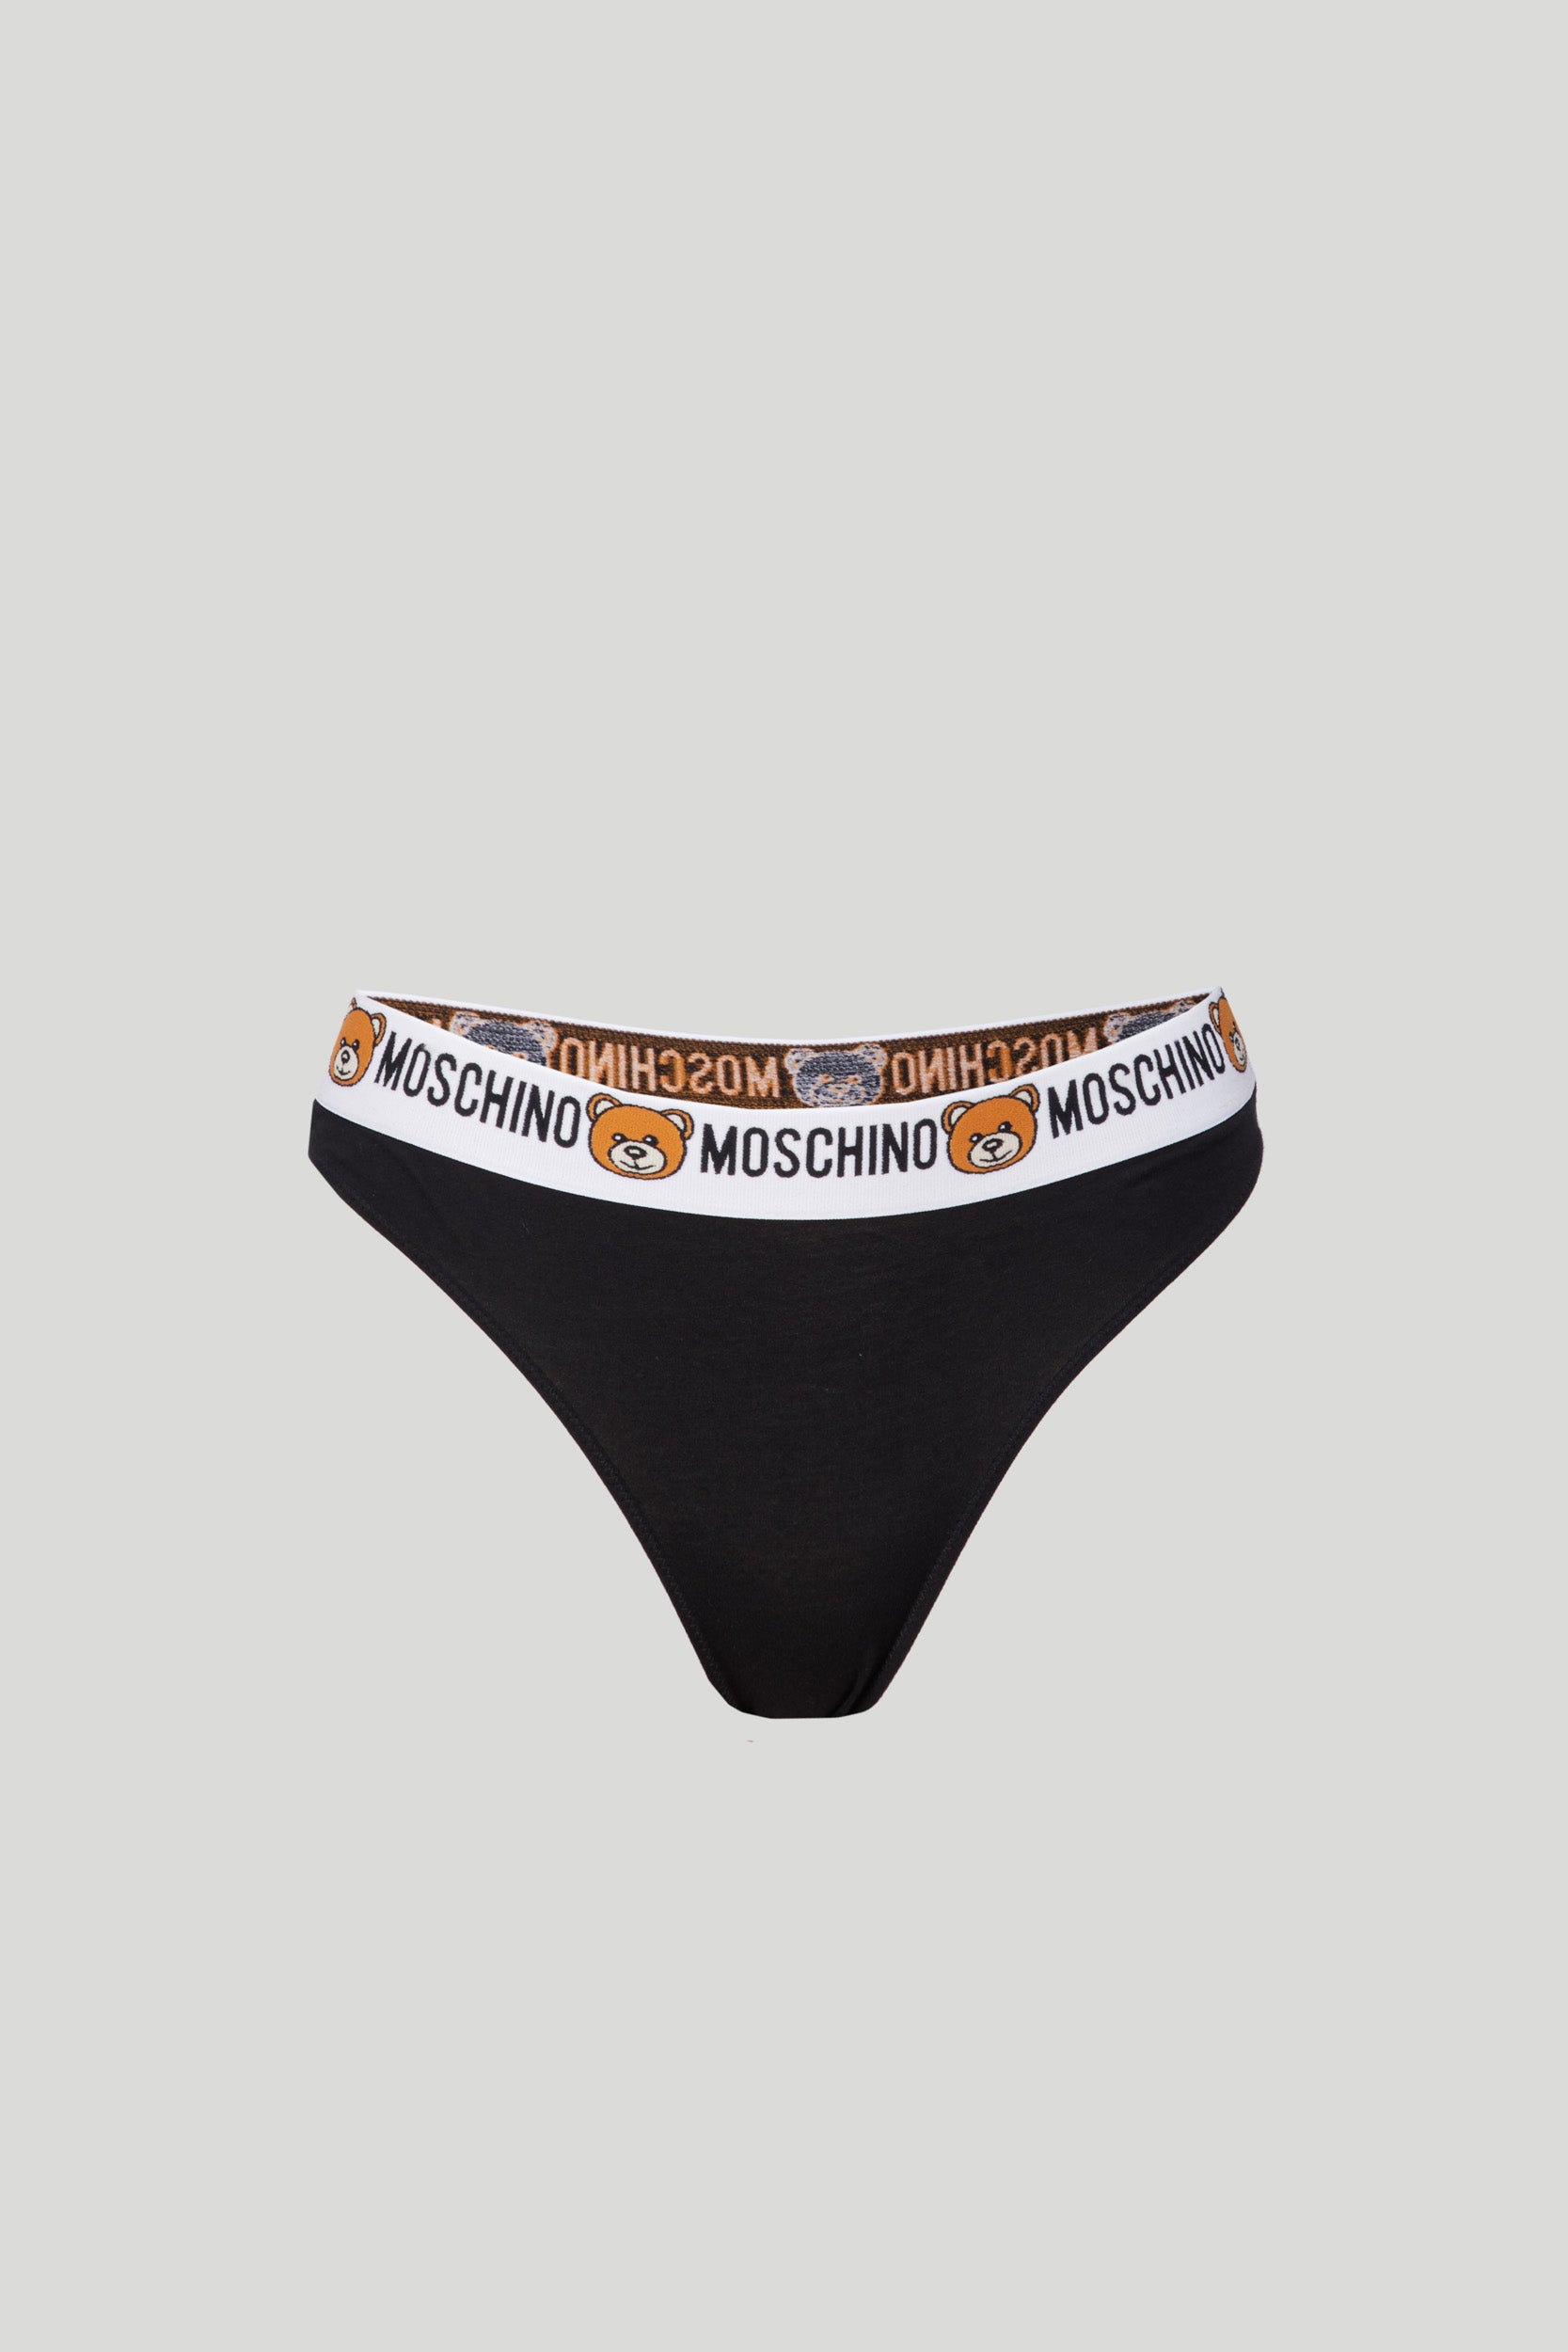 MOSCHINO Black Slip with Moschino Logo and Teddy